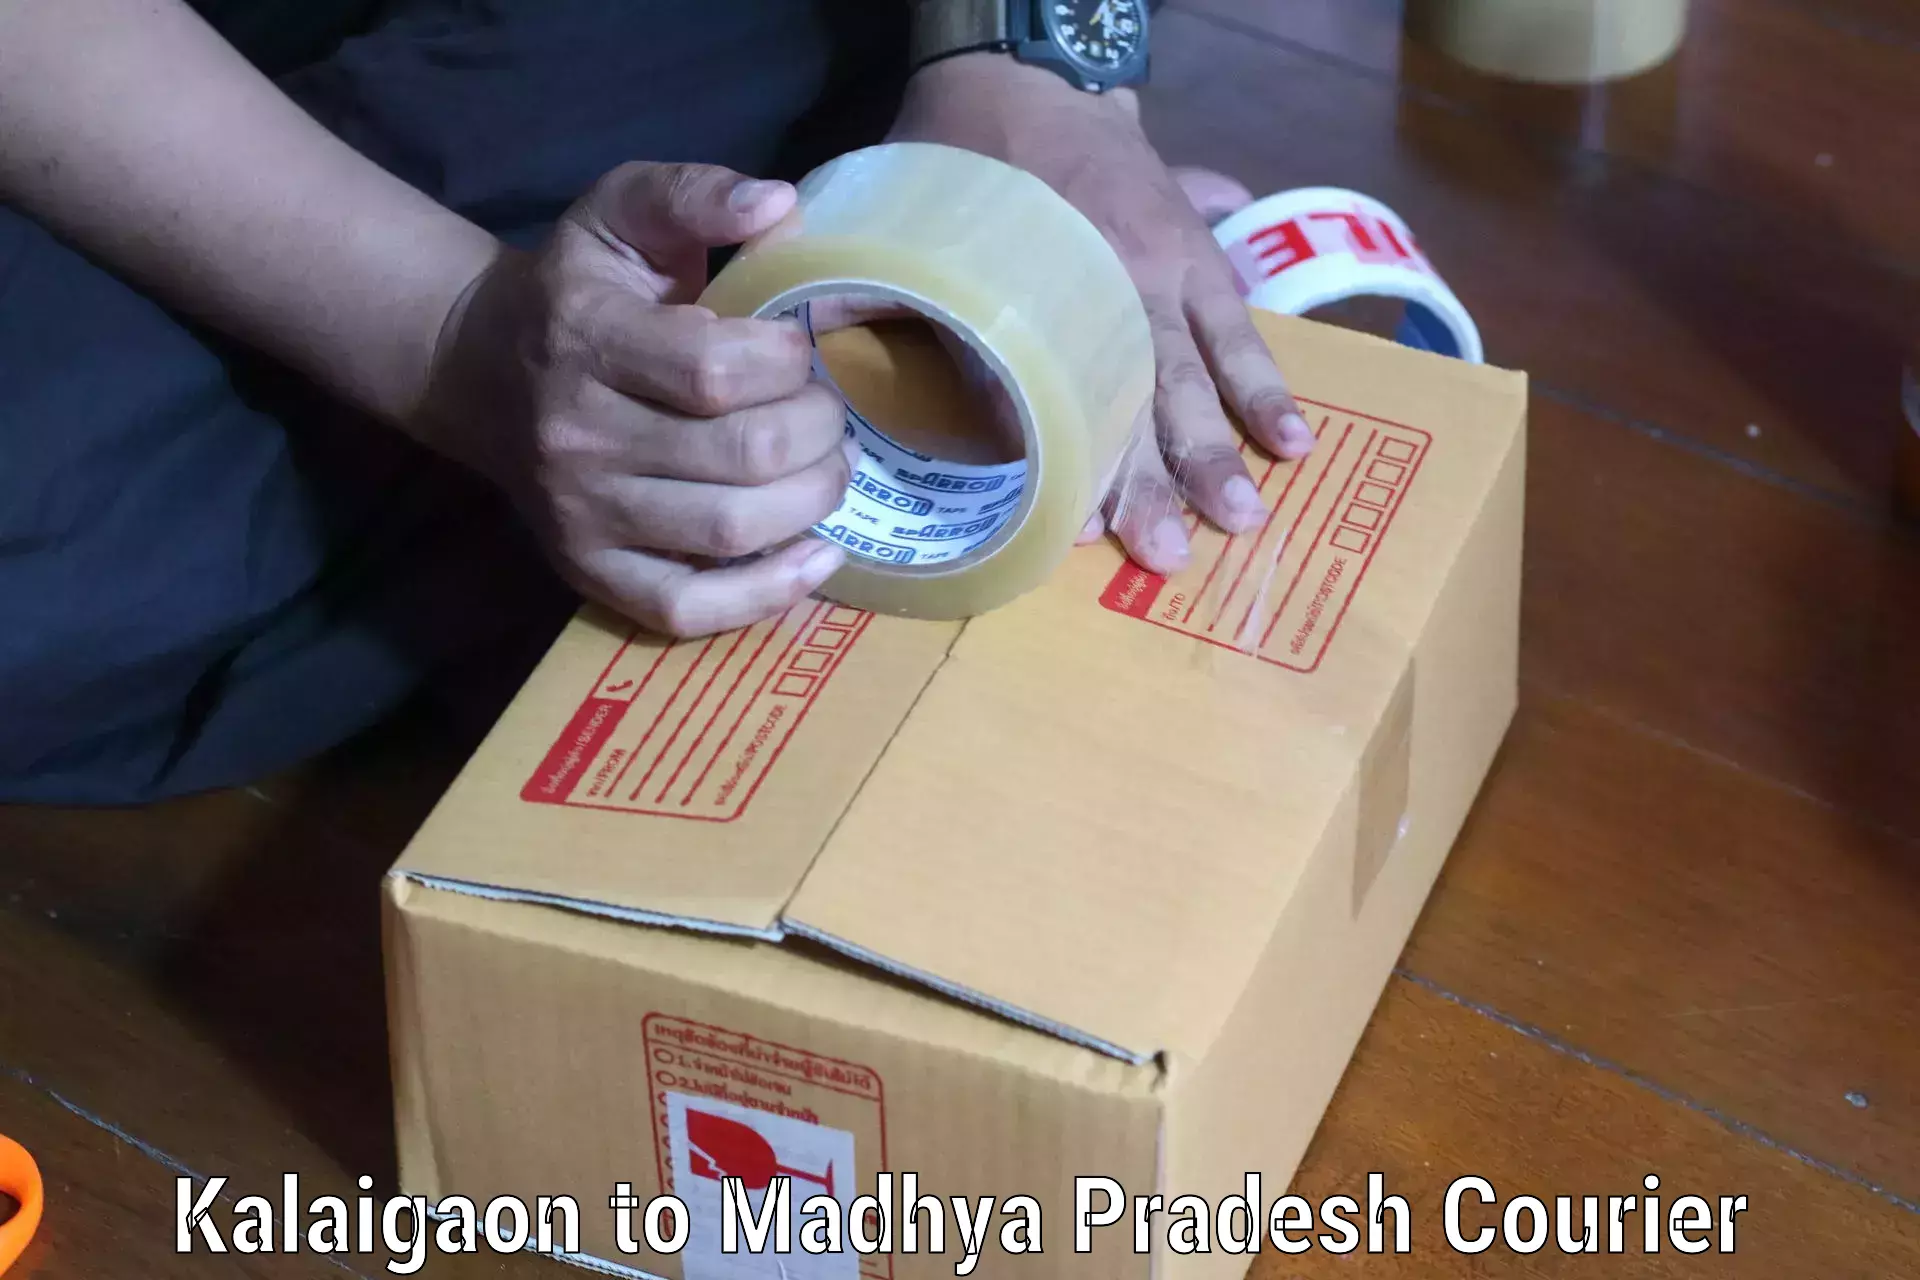 Professional courier services Kalaigaon to Rehli